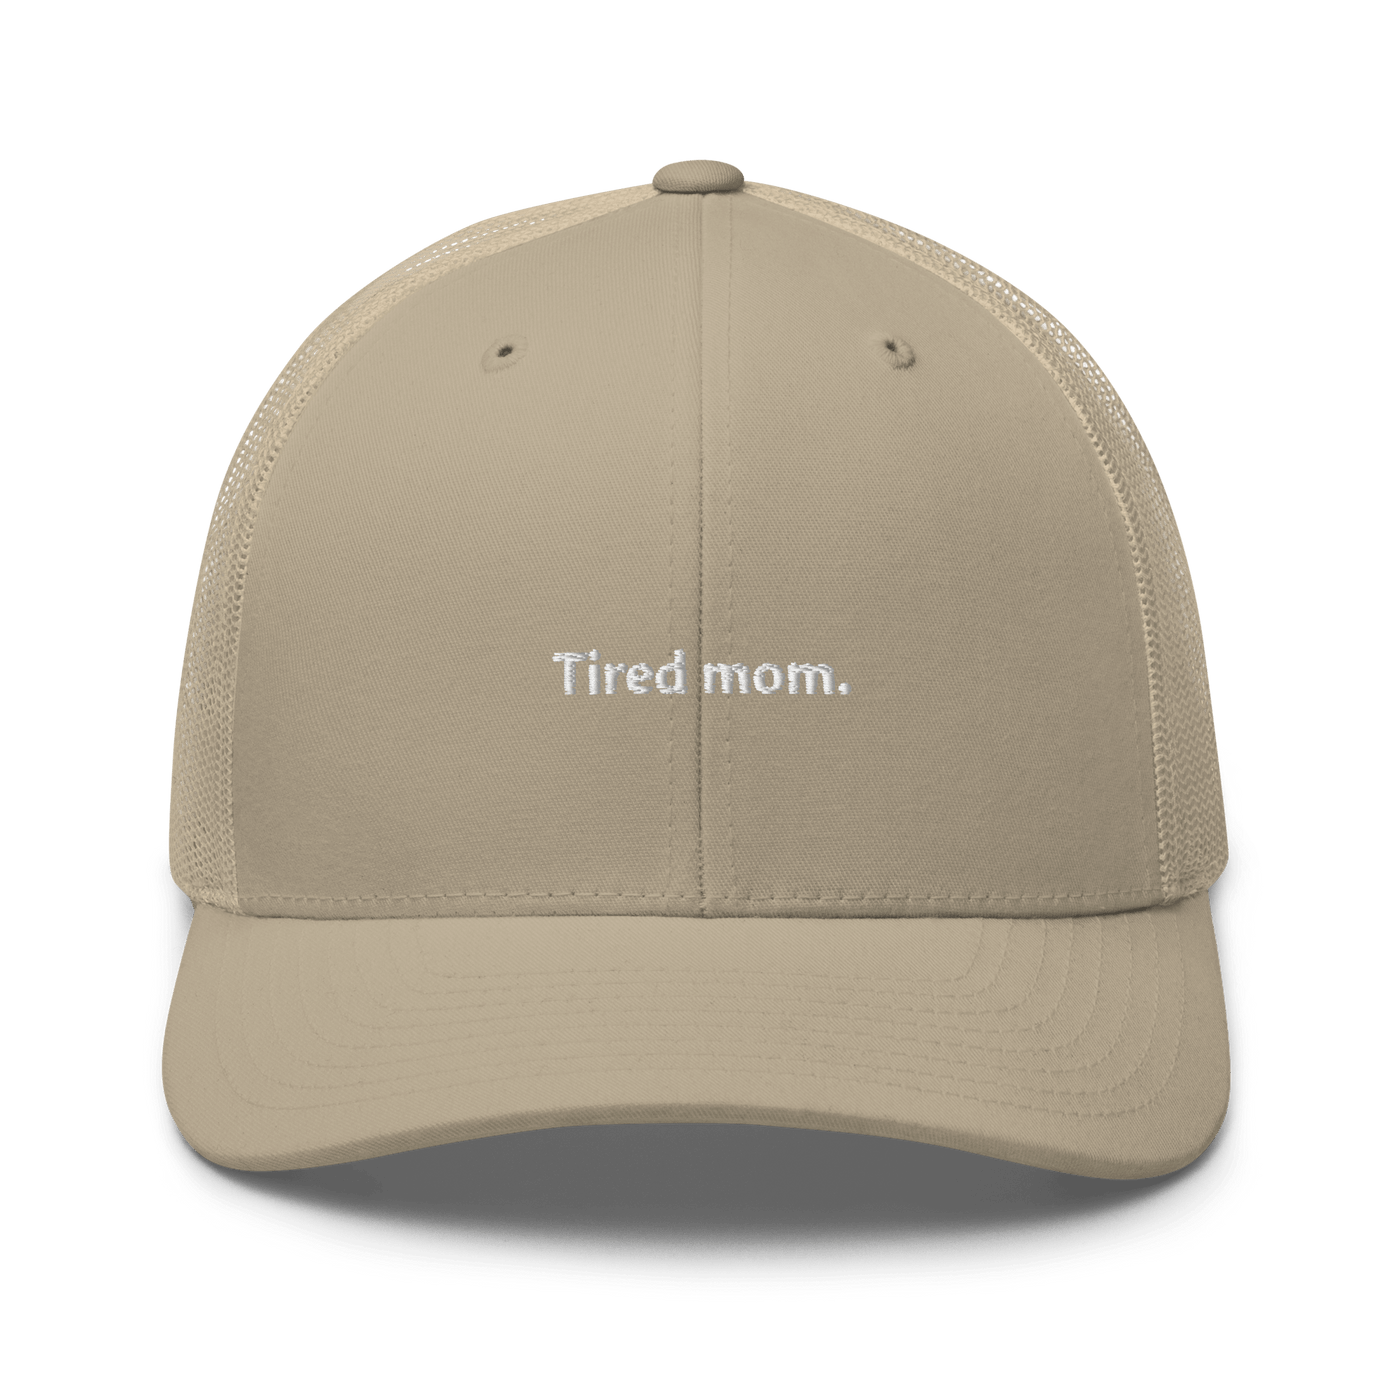 Tired Mom Trucker Cap - Khaki - - Just Another Cap Store